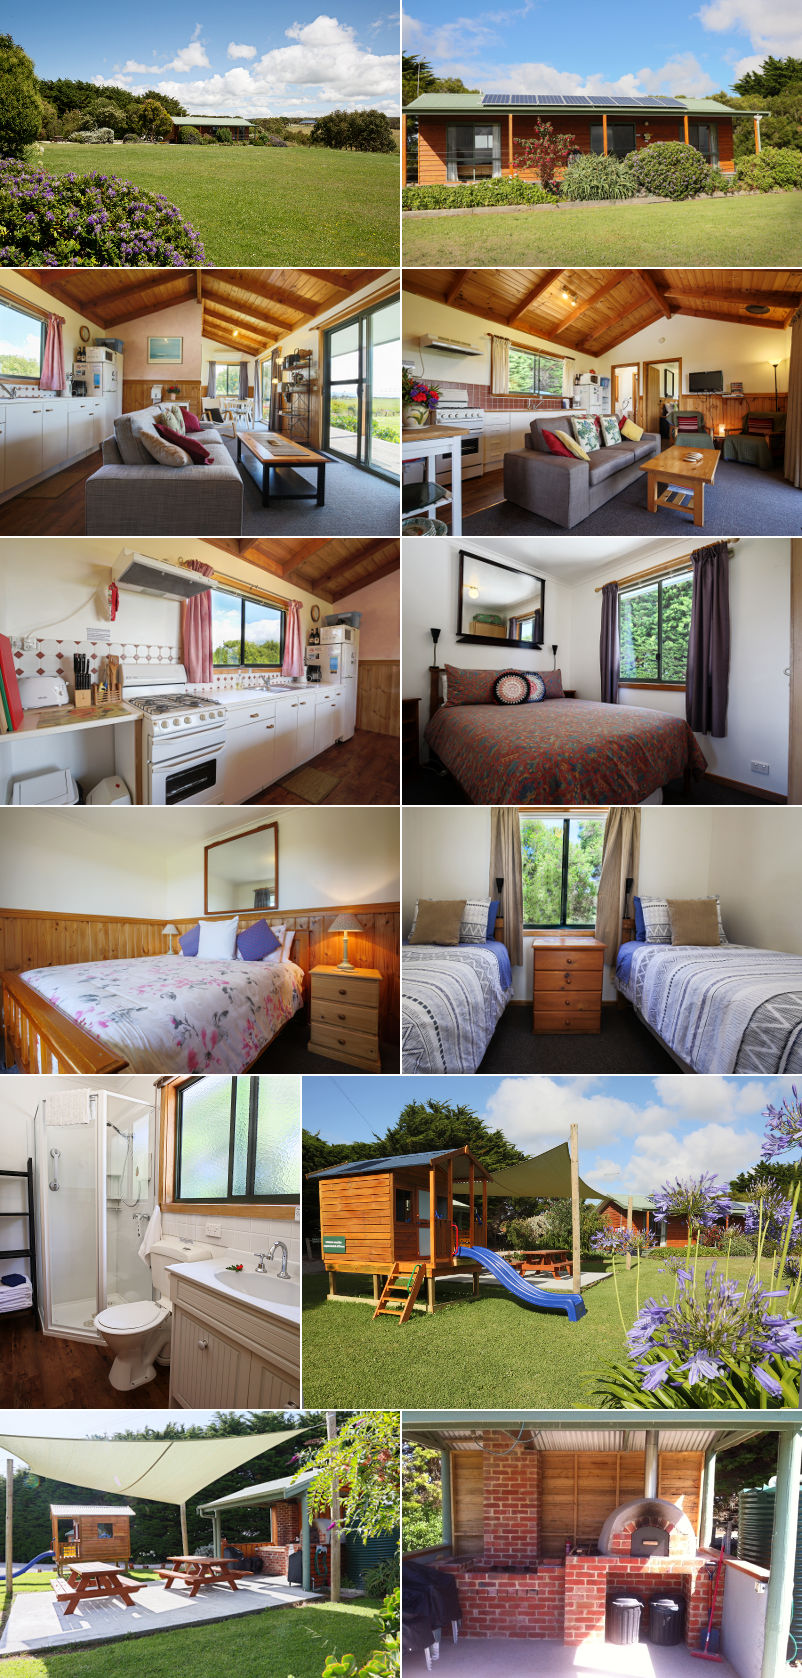 Buln Buln Cabins, Loft House & Studio - The cabins